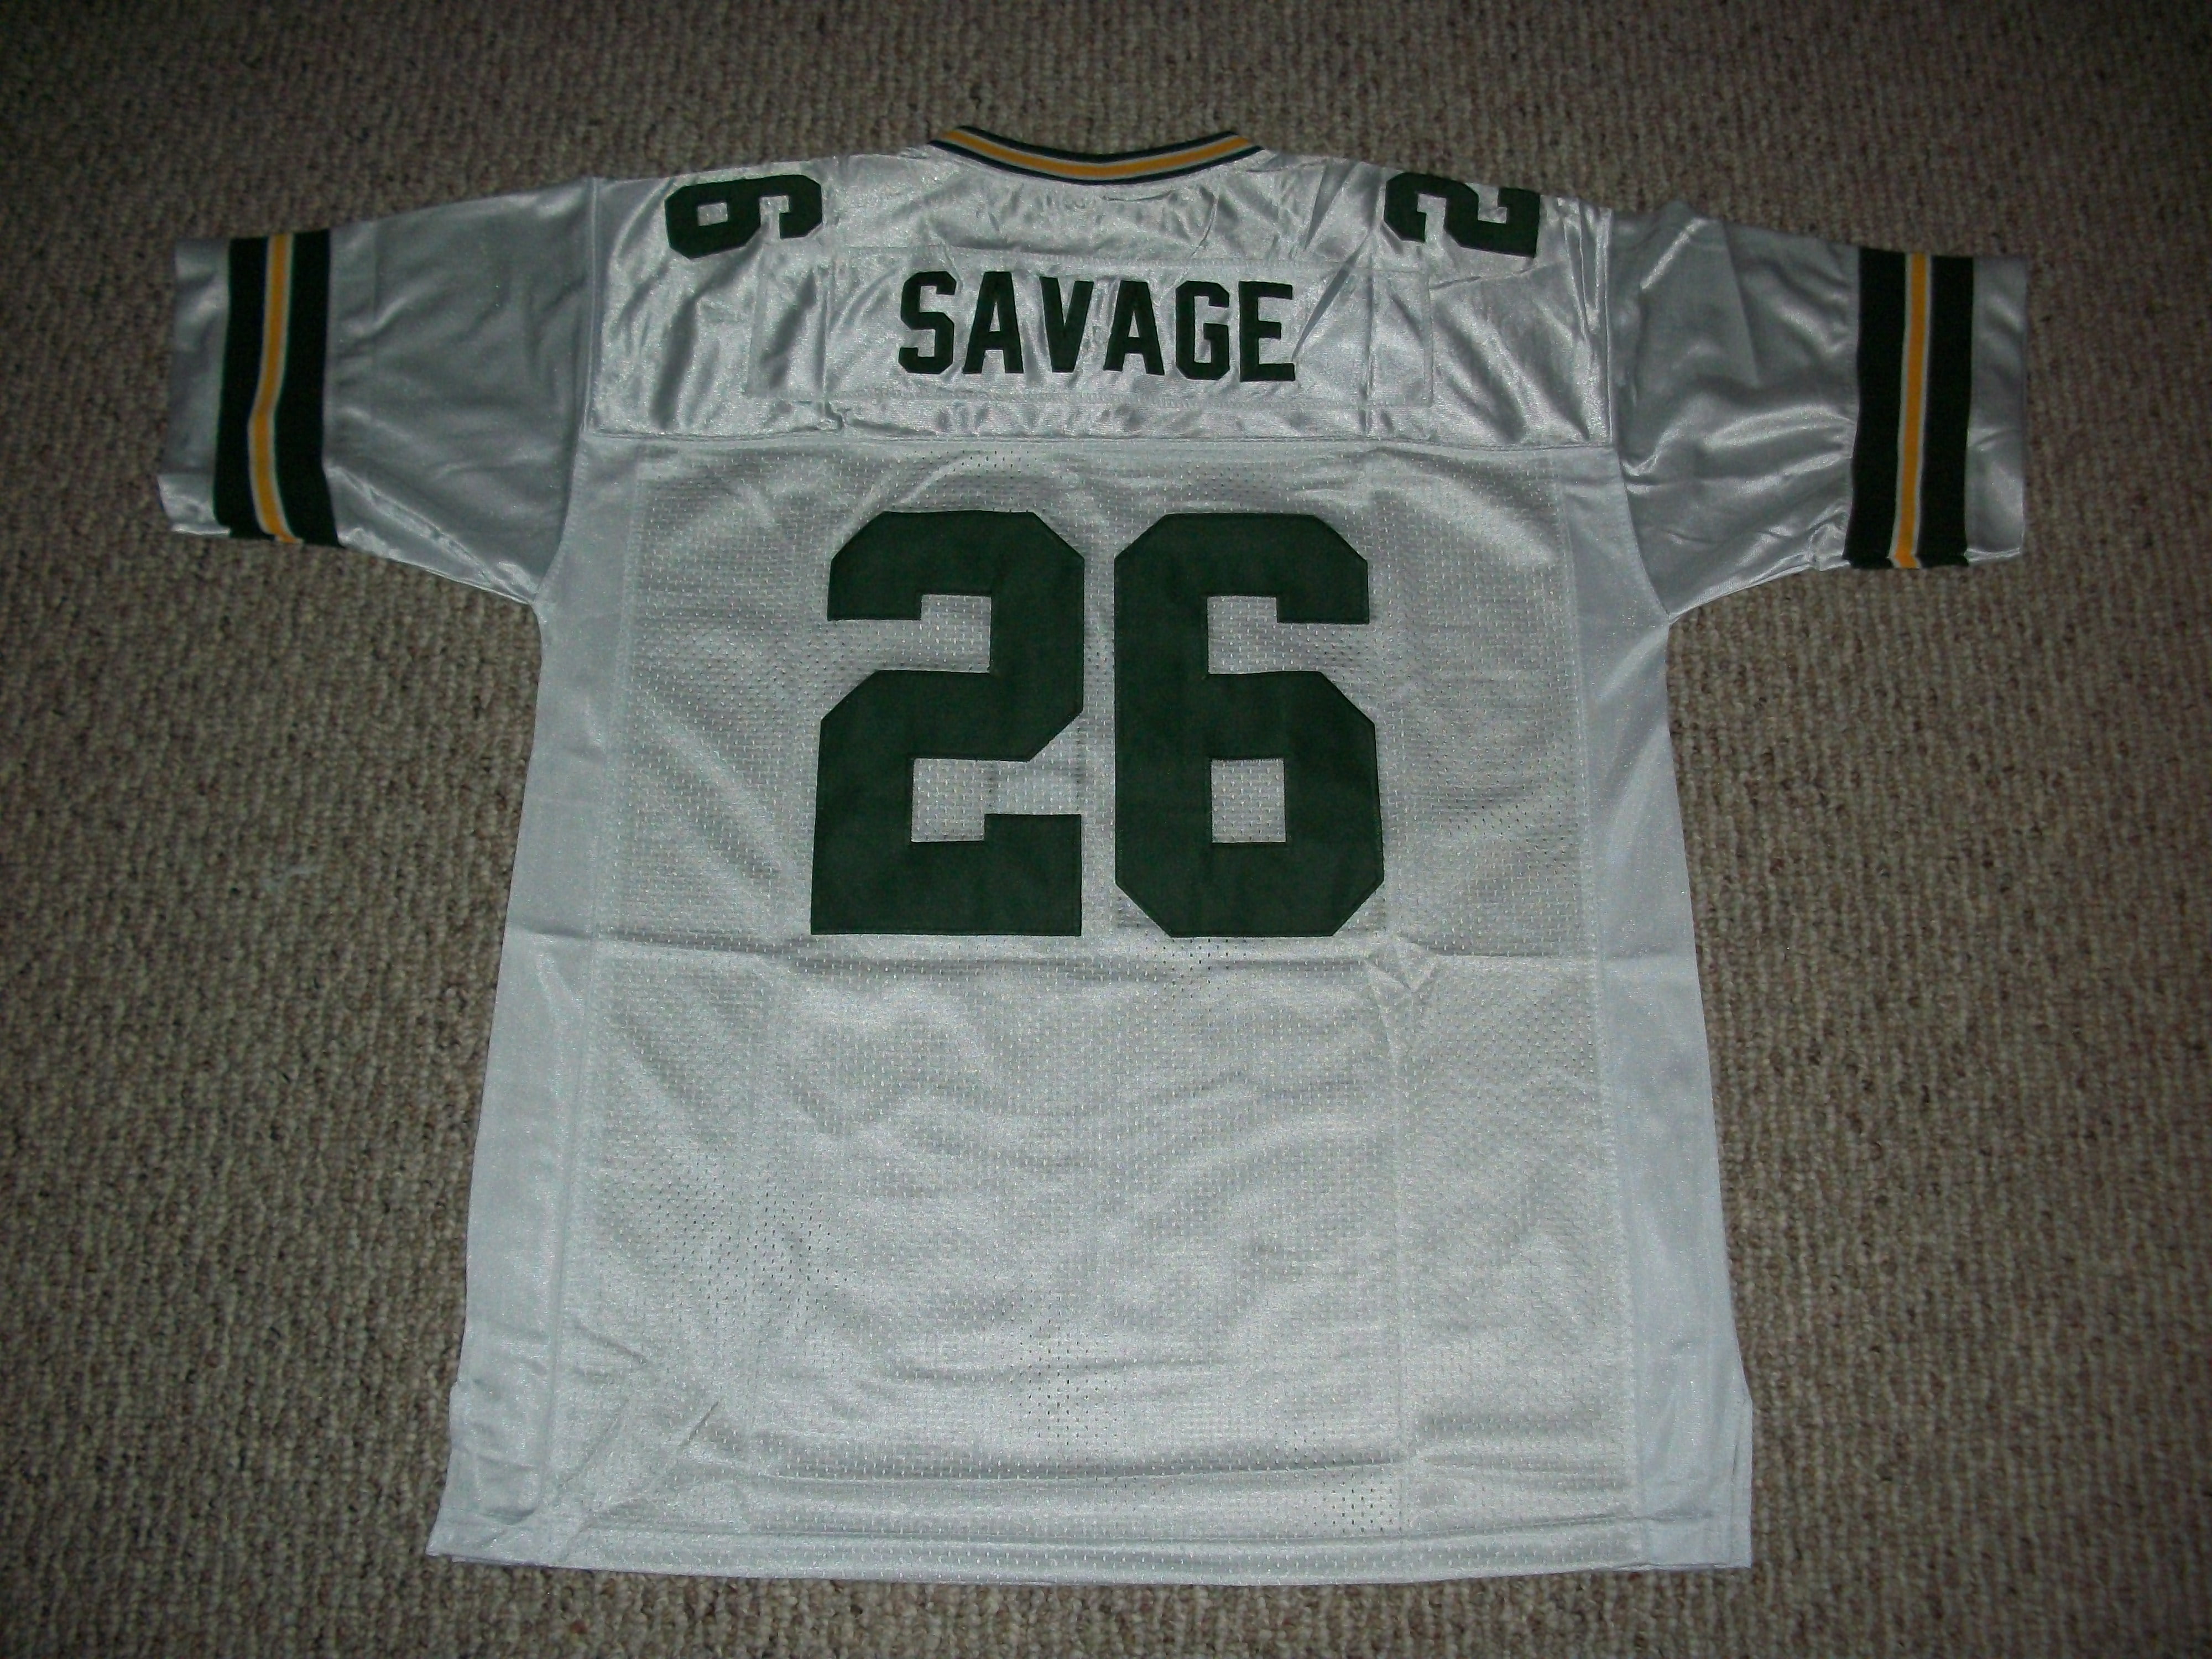 Largo no se dio cuenta Sumamente elegante Darnell Savage Jersey #26 Green Bay Unsigned Custom Stitched White Football  New No Brands/Logos Sizes S-3XL - Walmart.com